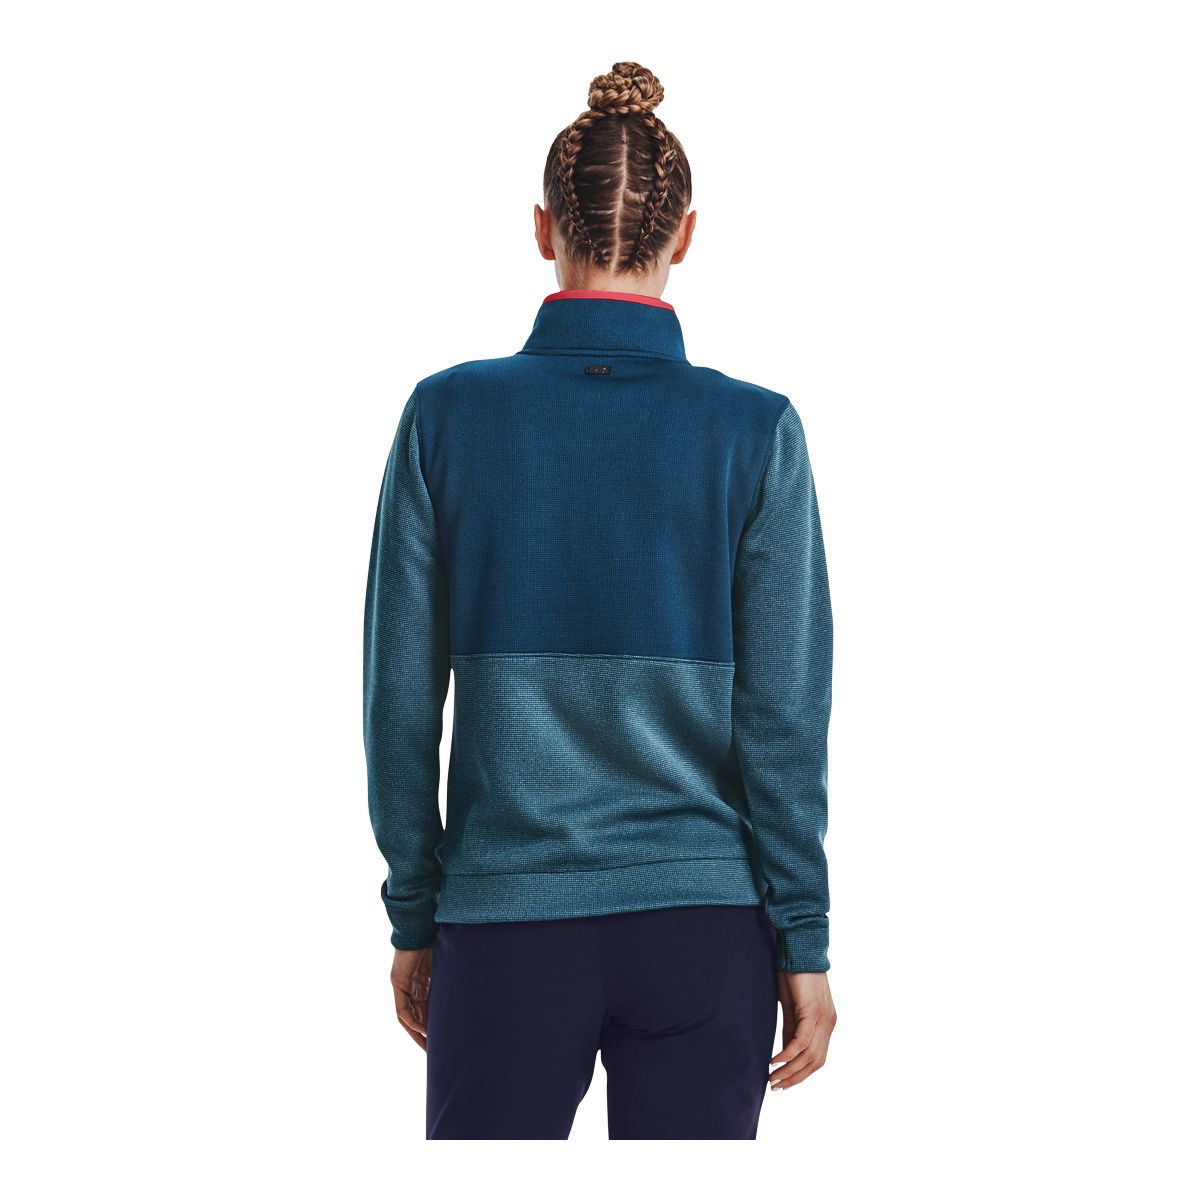 Under Armour Golf Women's Storm Sweater Fleece 1/2 Zip Long Sleeve